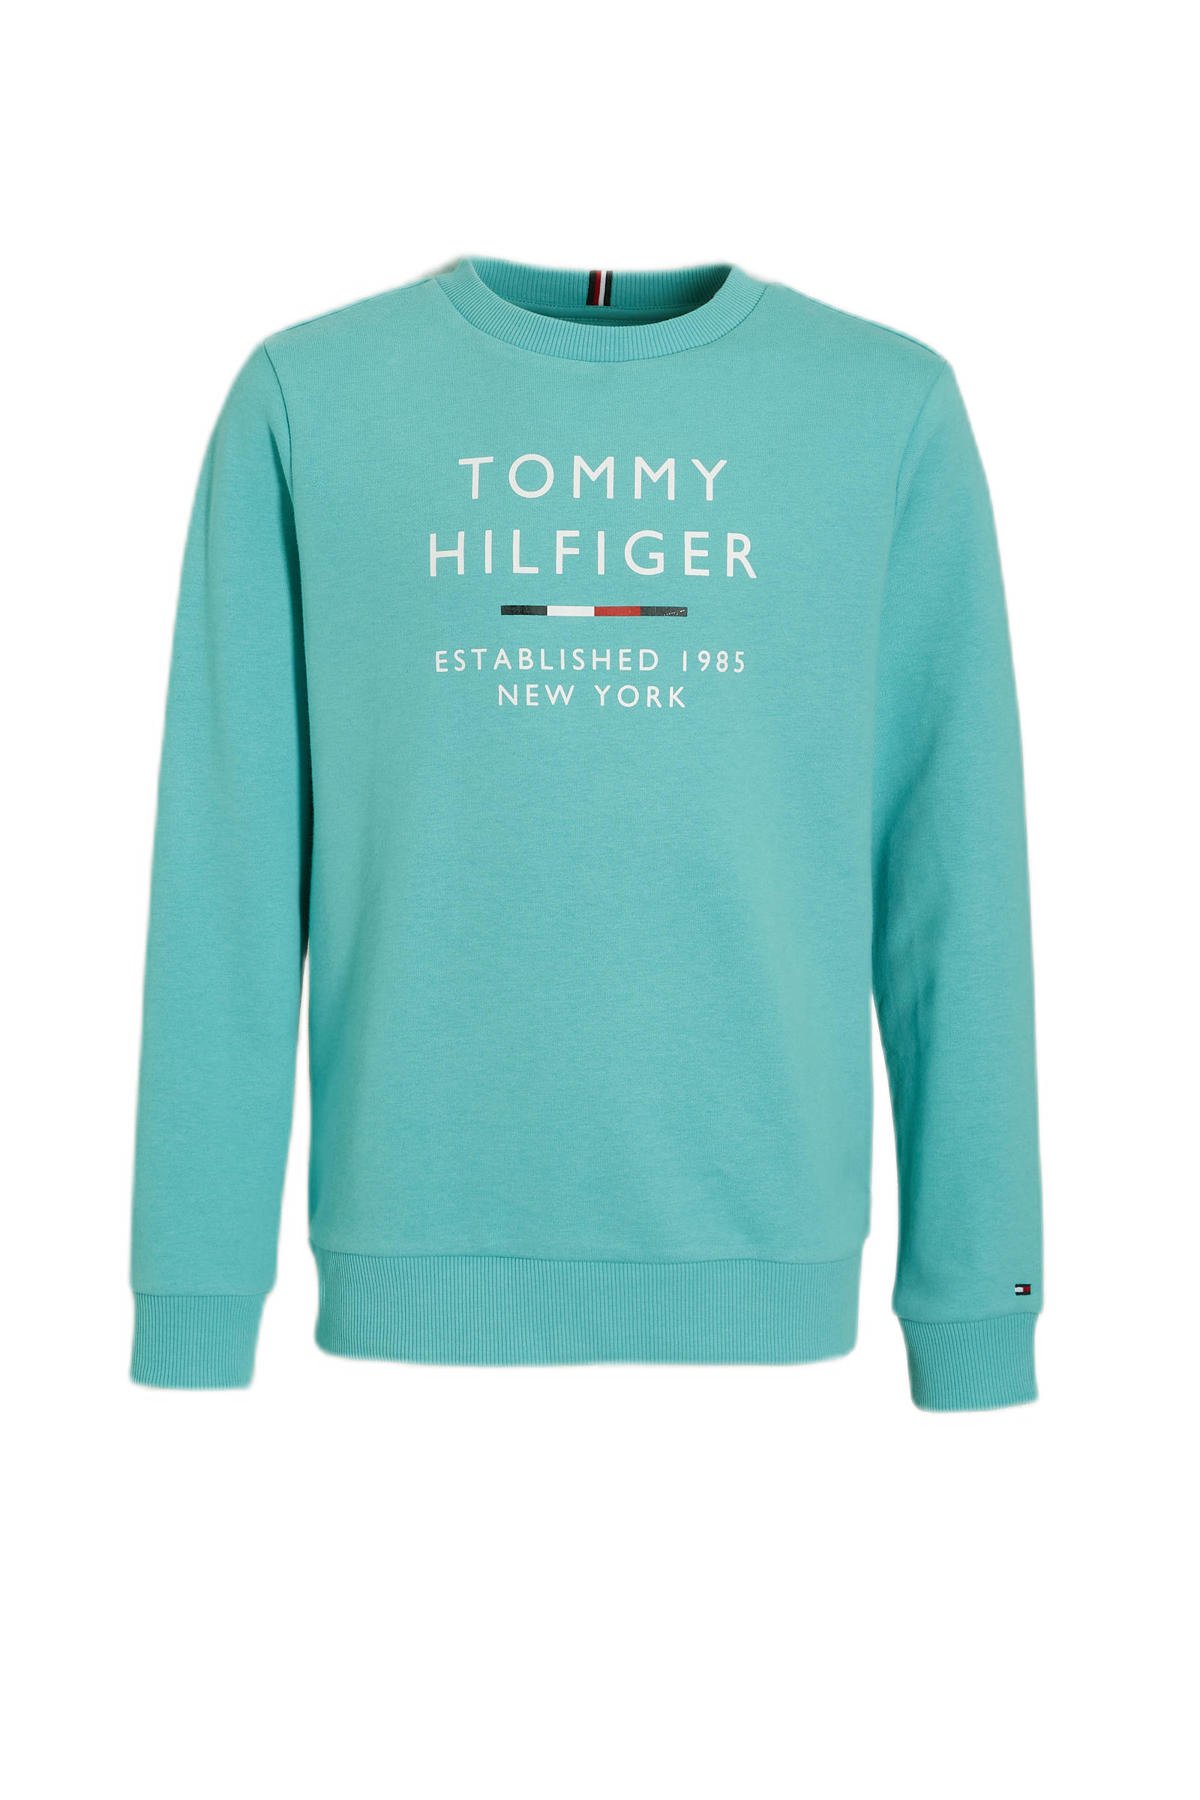 Je zal beter worden band Uitputting Tommy Hilfiger sweater met logo turquoise | wehkamp